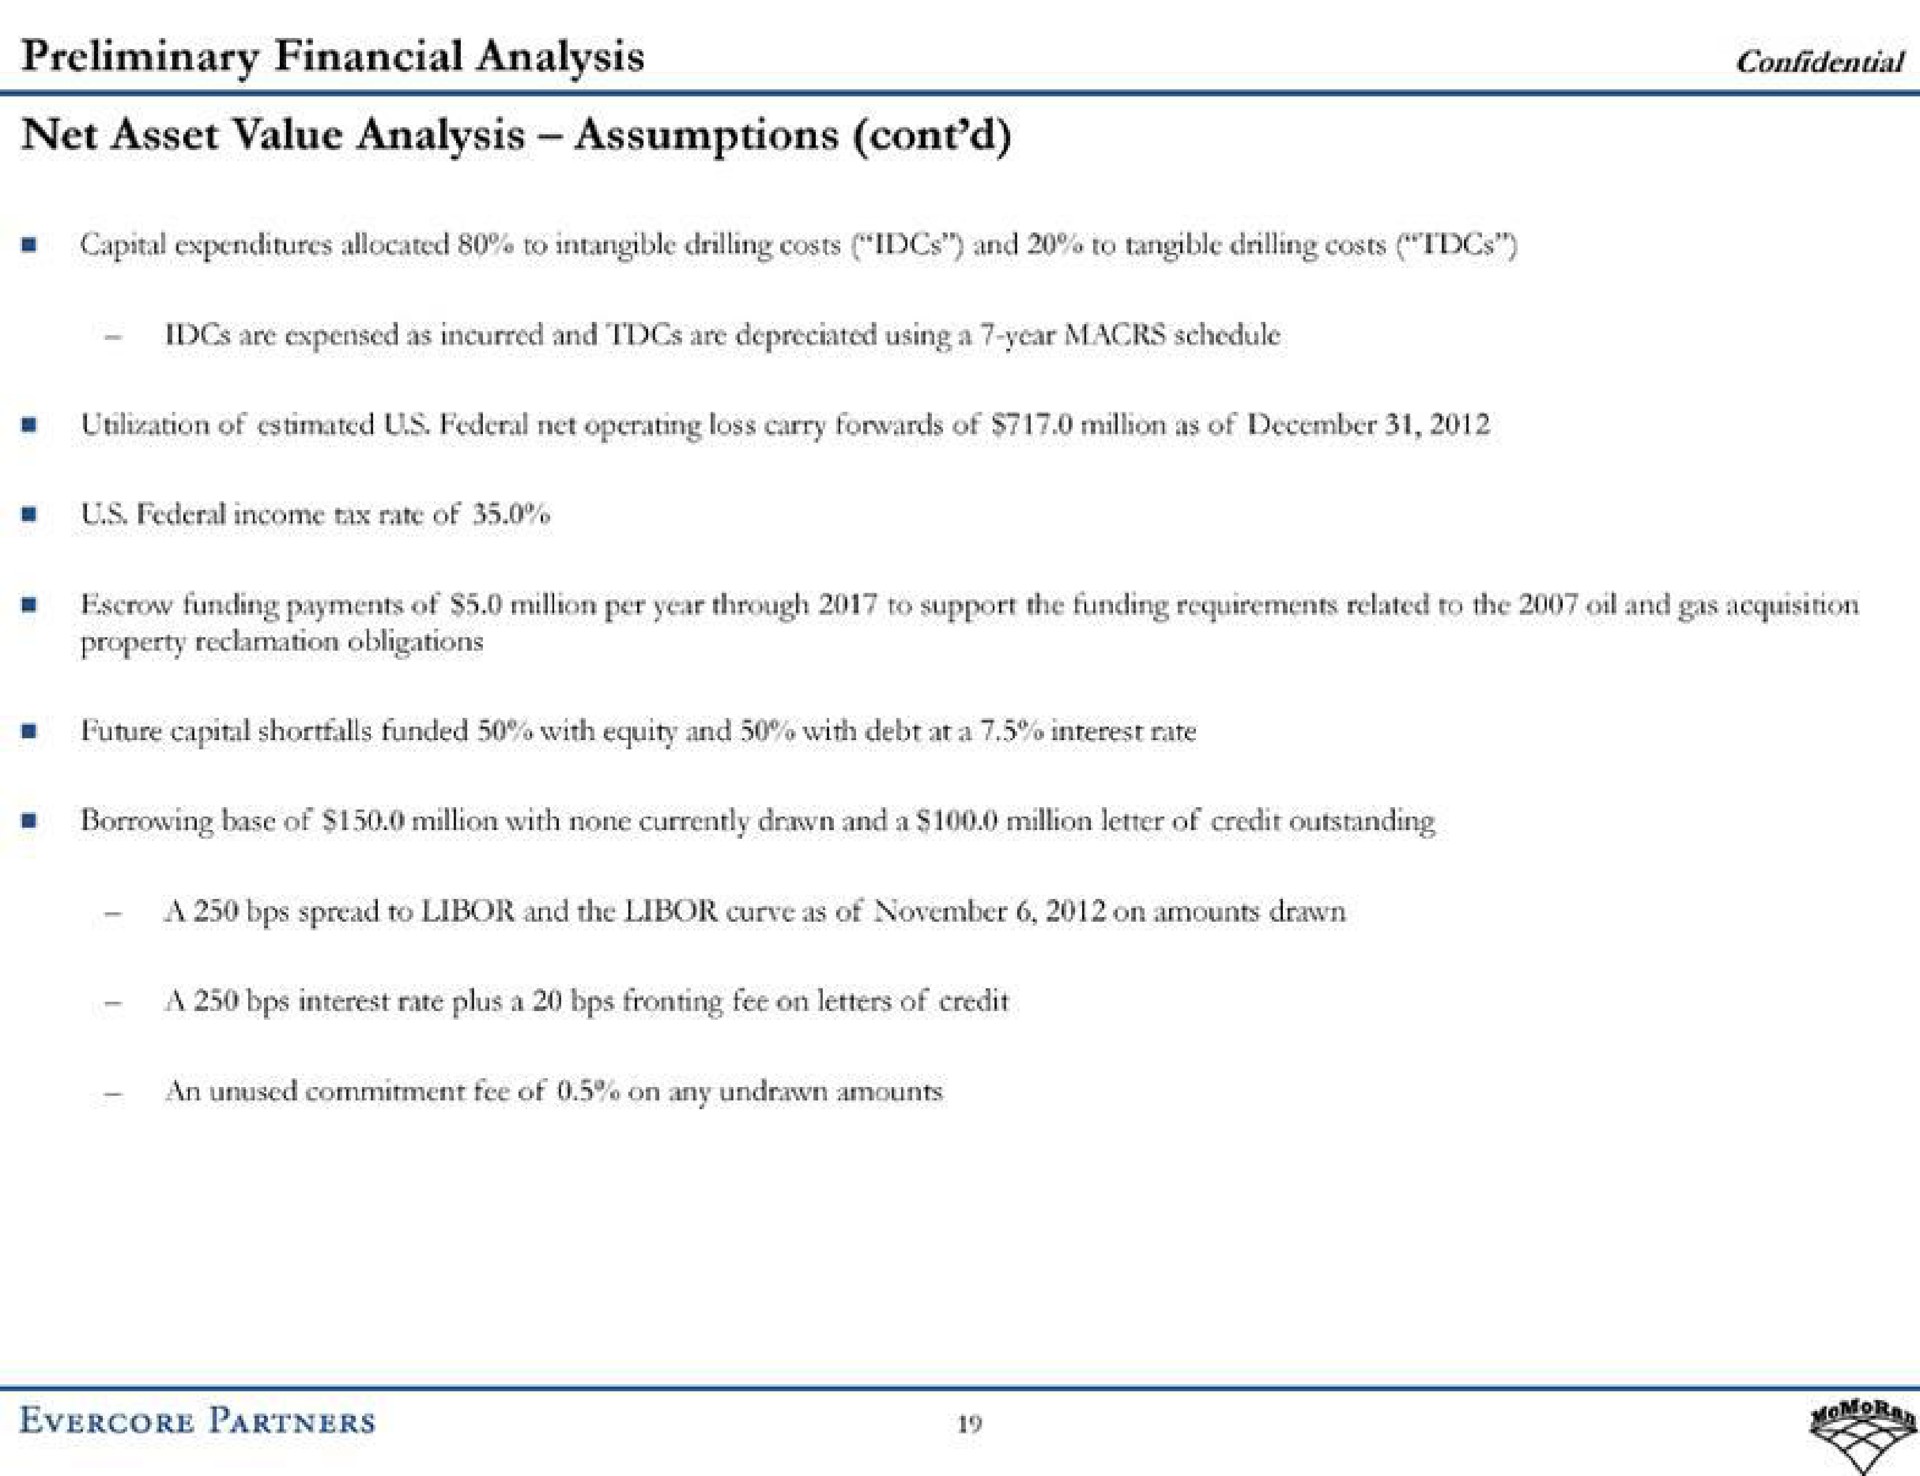 preliminary financial analysis net asset value analysis assumptions confidential | Evercore